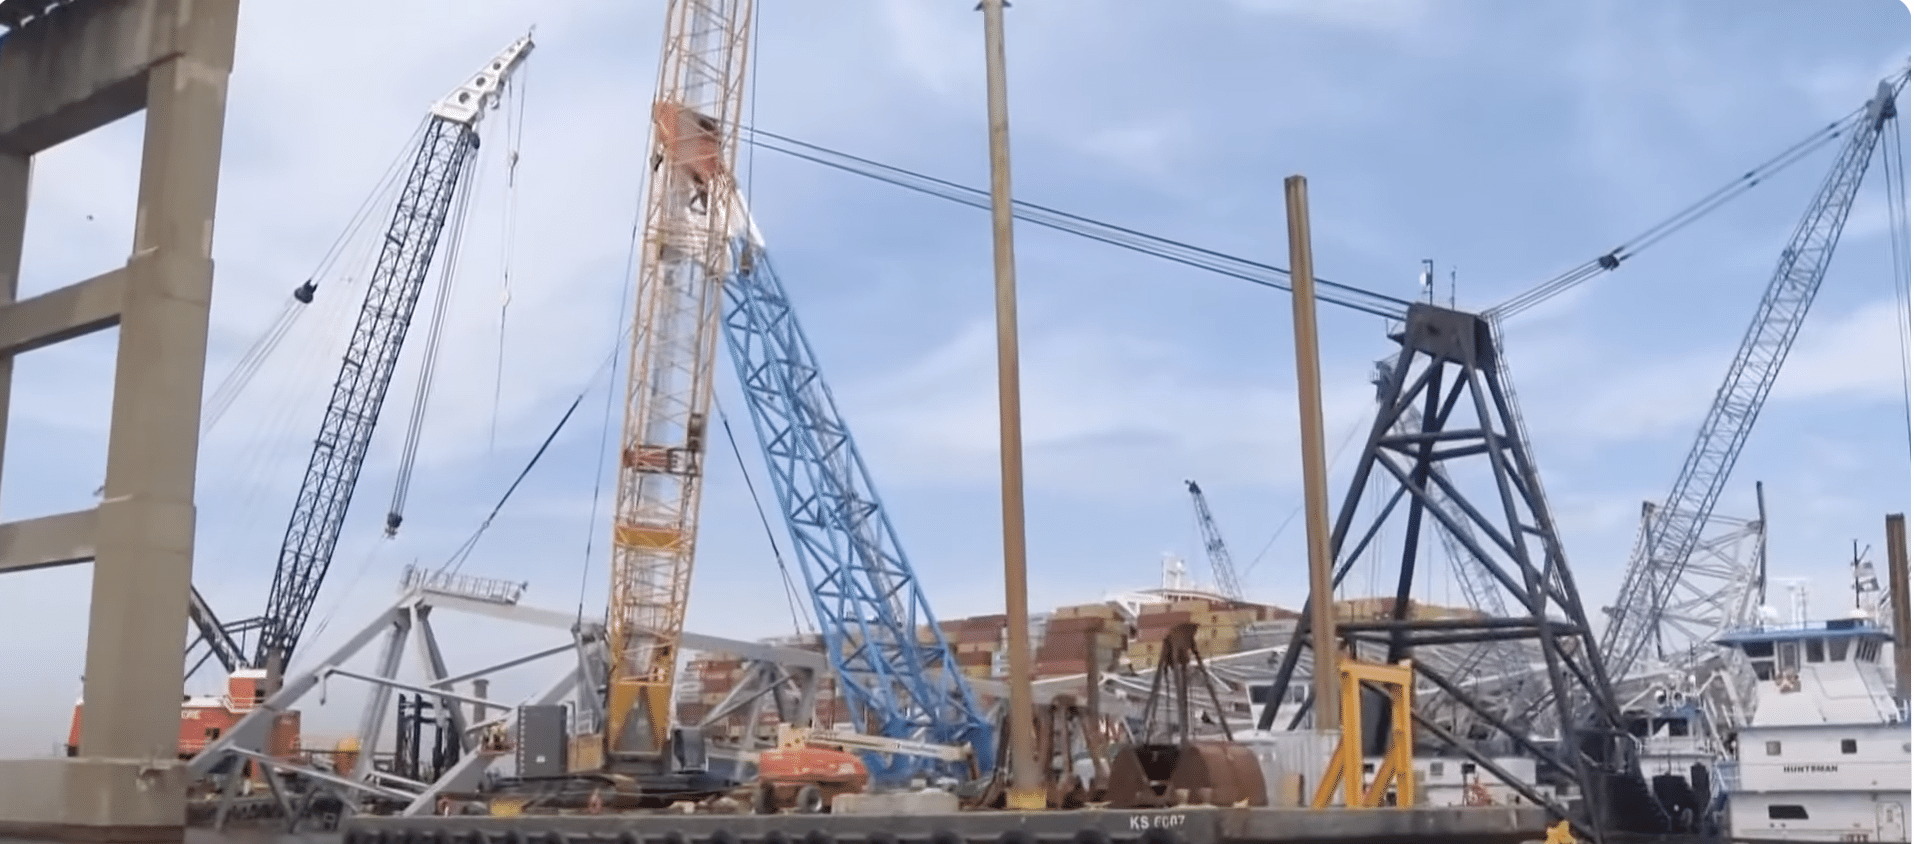 FBI opens criminal investigation into Baltimore bridge collapse